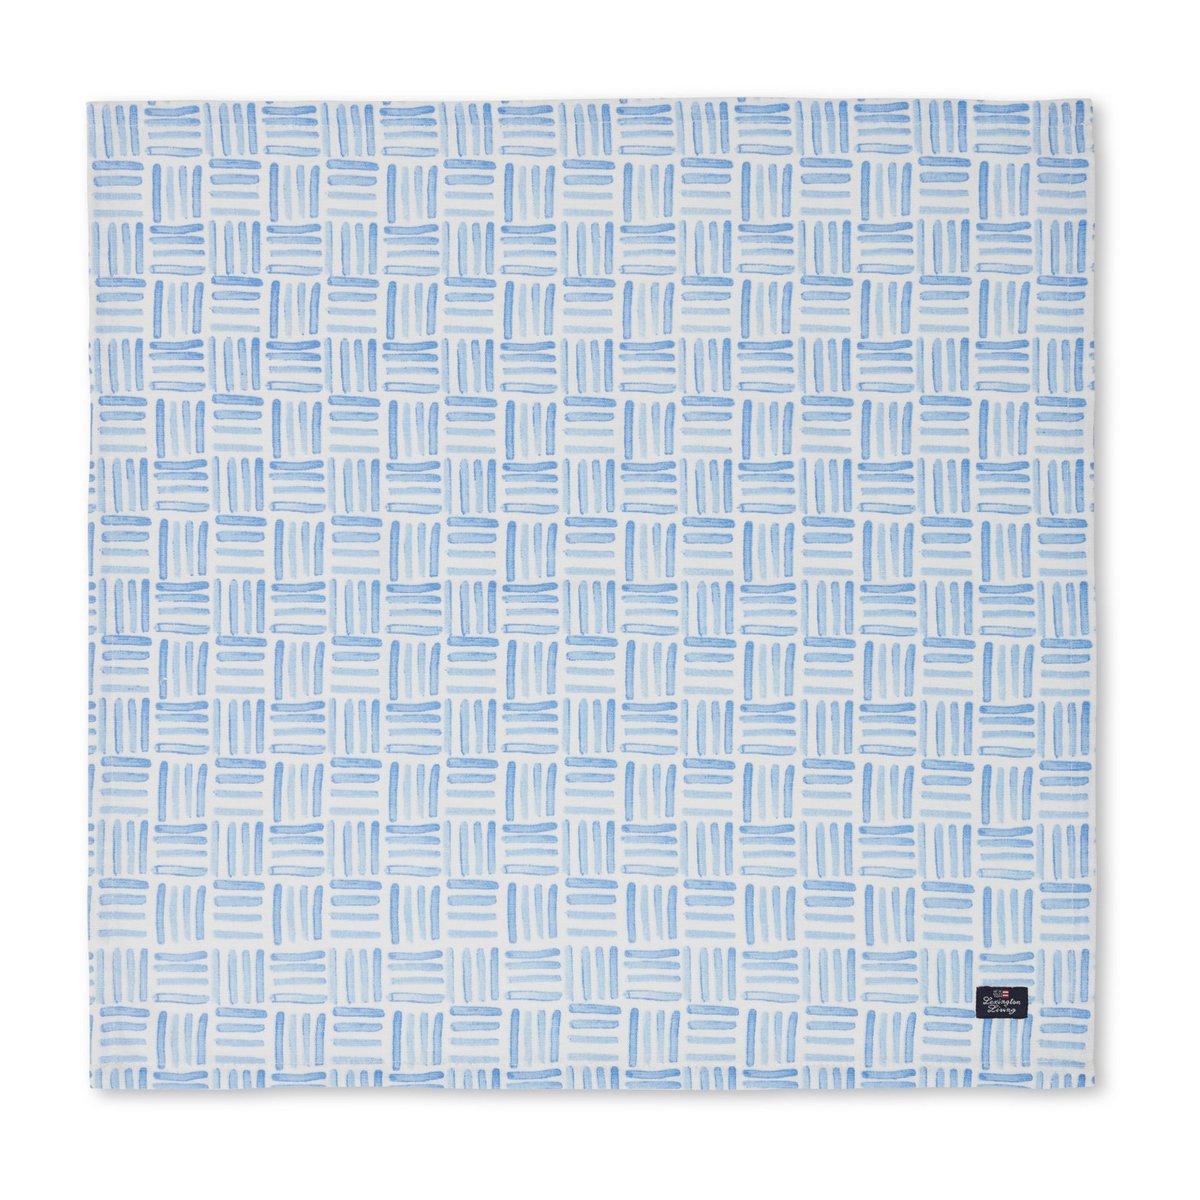 Lexington Graphic Printed Cotton -servetti 50×50 cm Blue-White